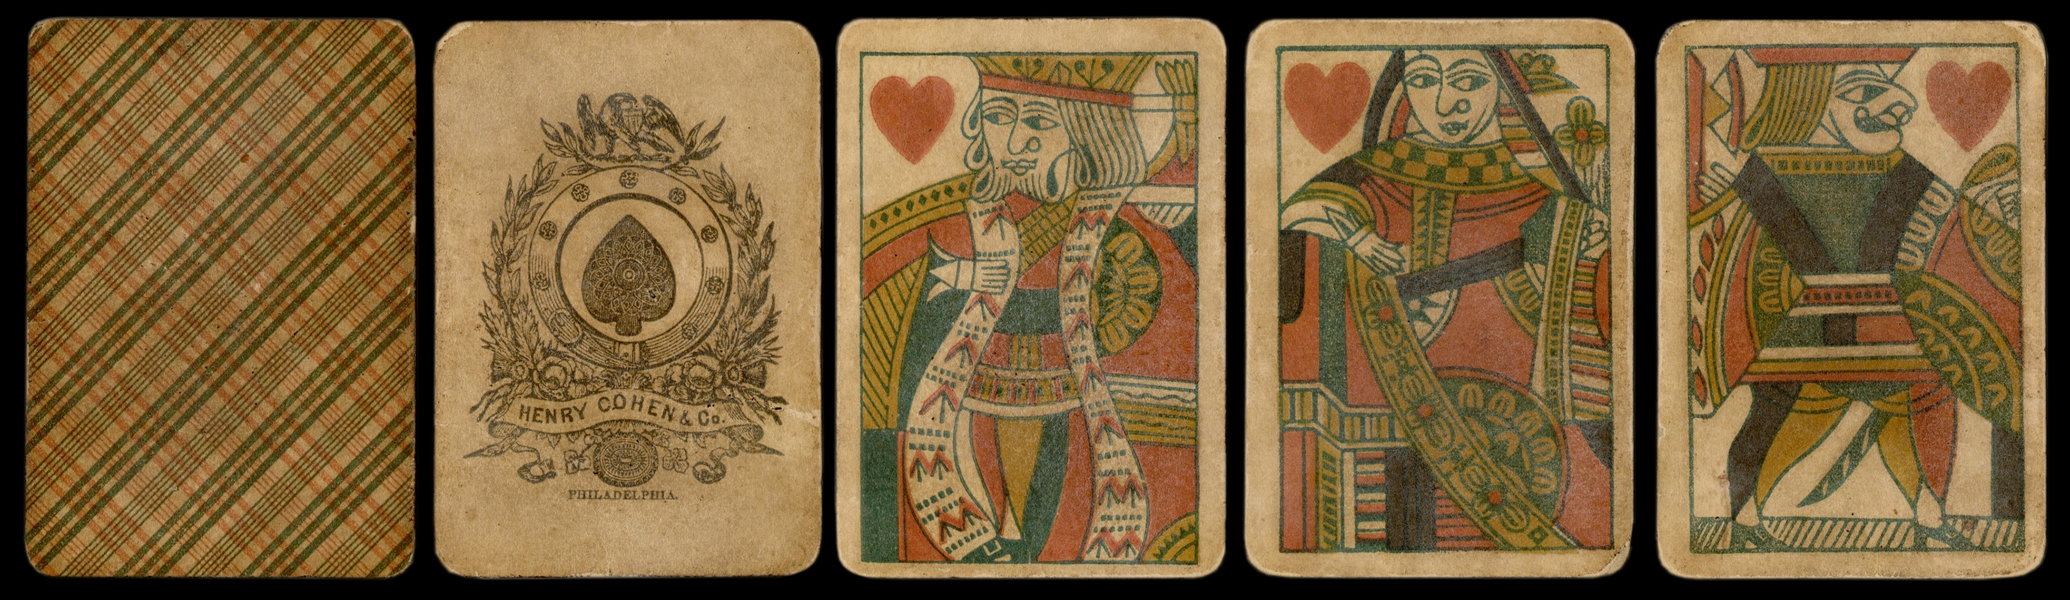  Henry Cohen Playing Cards. Philadelphia: Henry Cohen & Co.,...